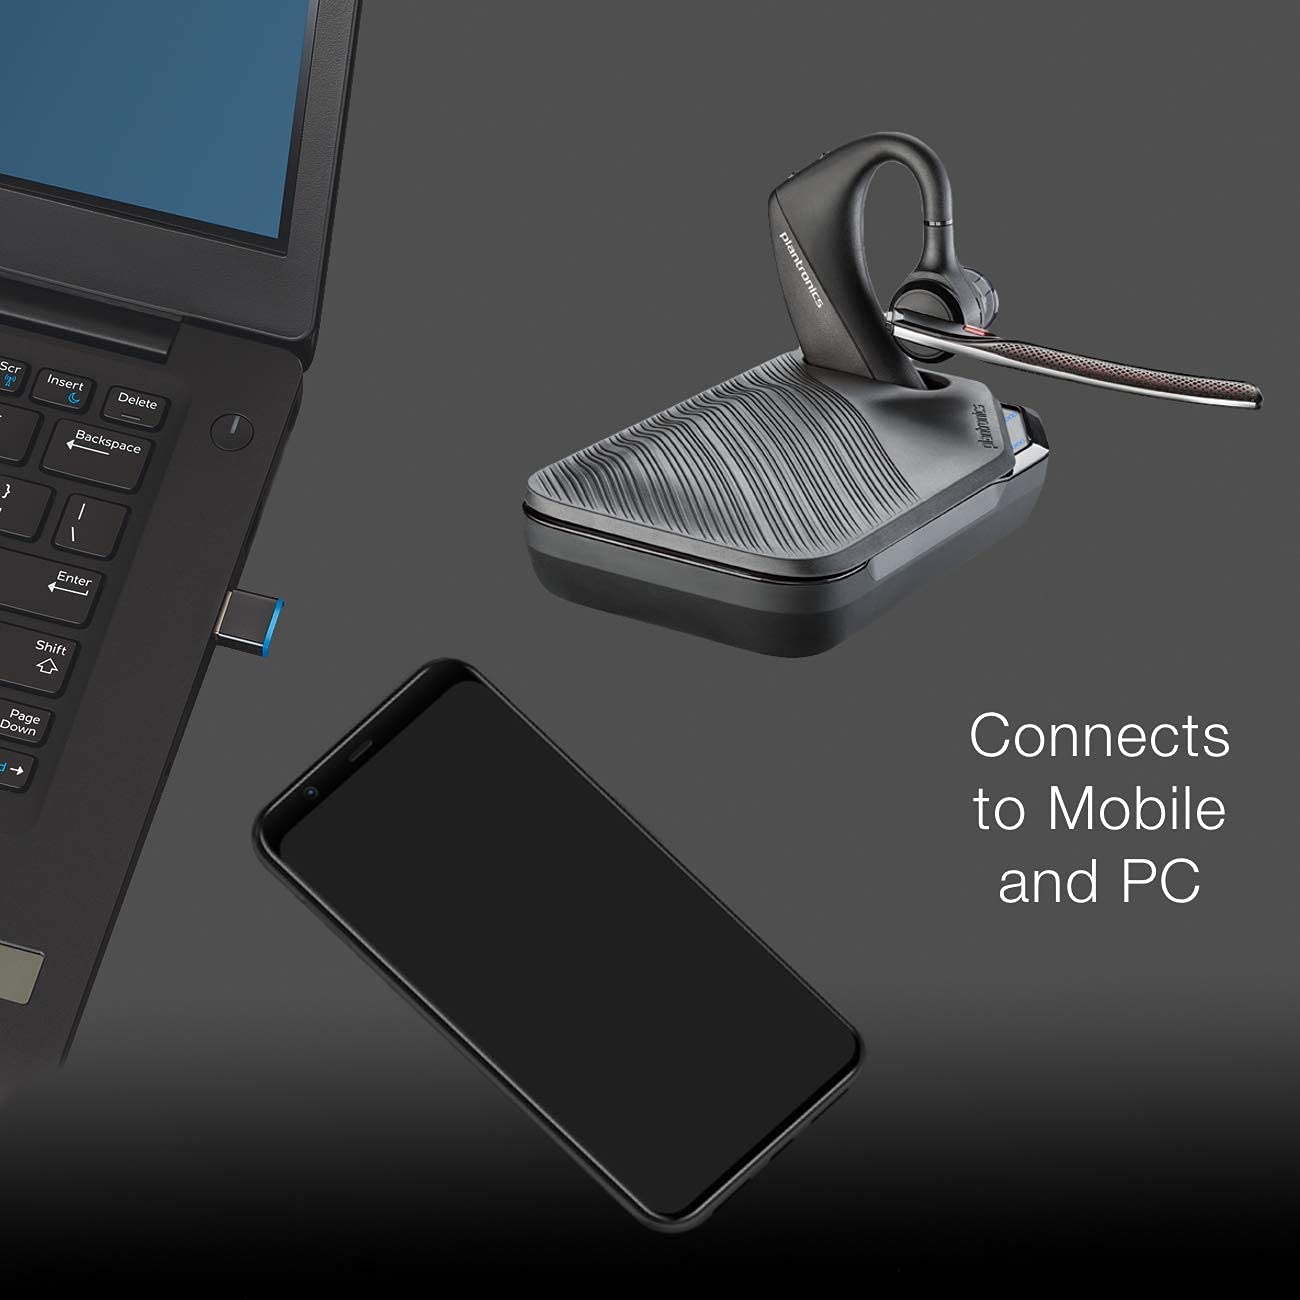 Plantronics Voyager 5200-UC Bluetooth Headset #206110-01 - For Smartphones, PC, MAC, Softphones, Tablets (Renewed)